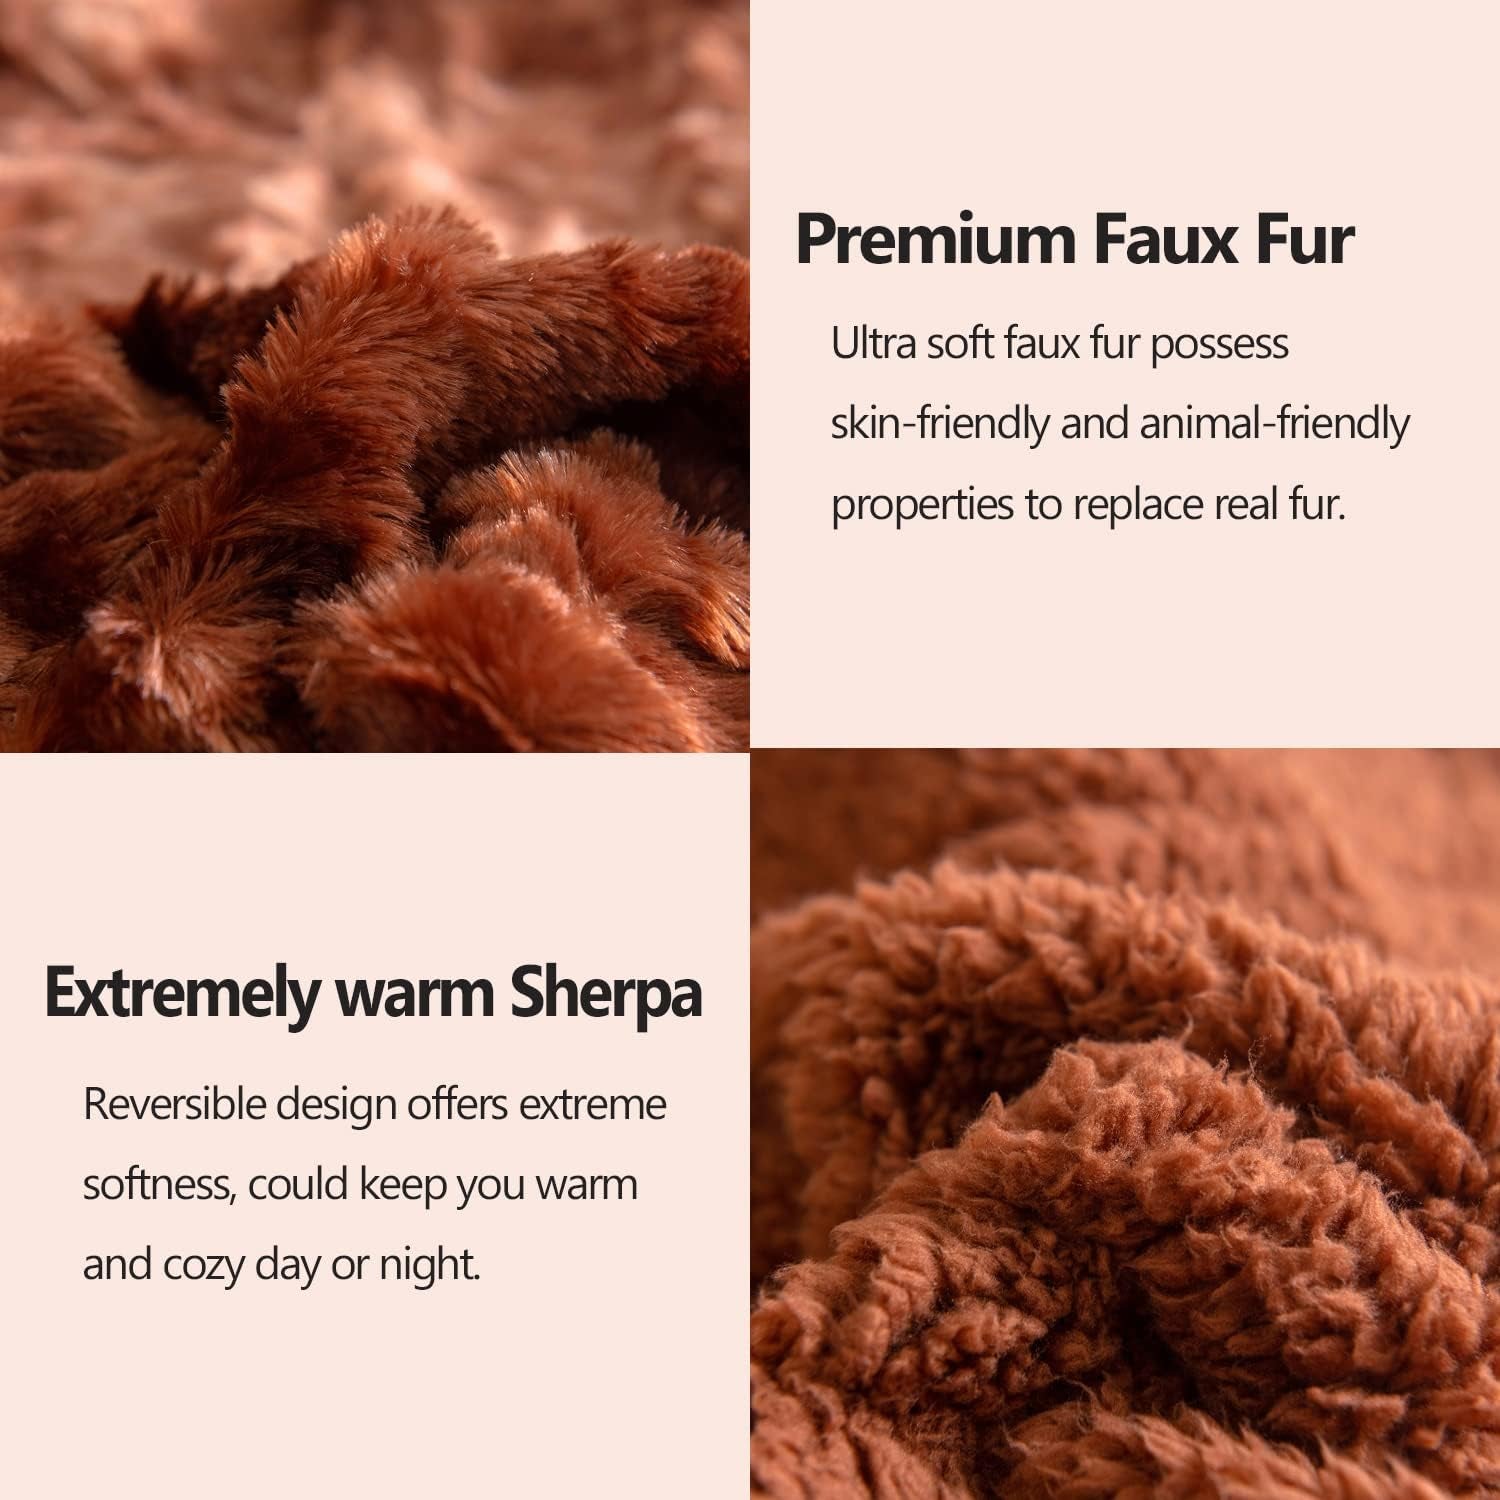 Super Soft Faux Fur Throw Blanket for Couch Tie-Dye Dark Brown Sherpa Fuzzy Plush Warm Blanket for Sofa Bed (Tie-Dye Dark Brown, Throw(40"X50"))